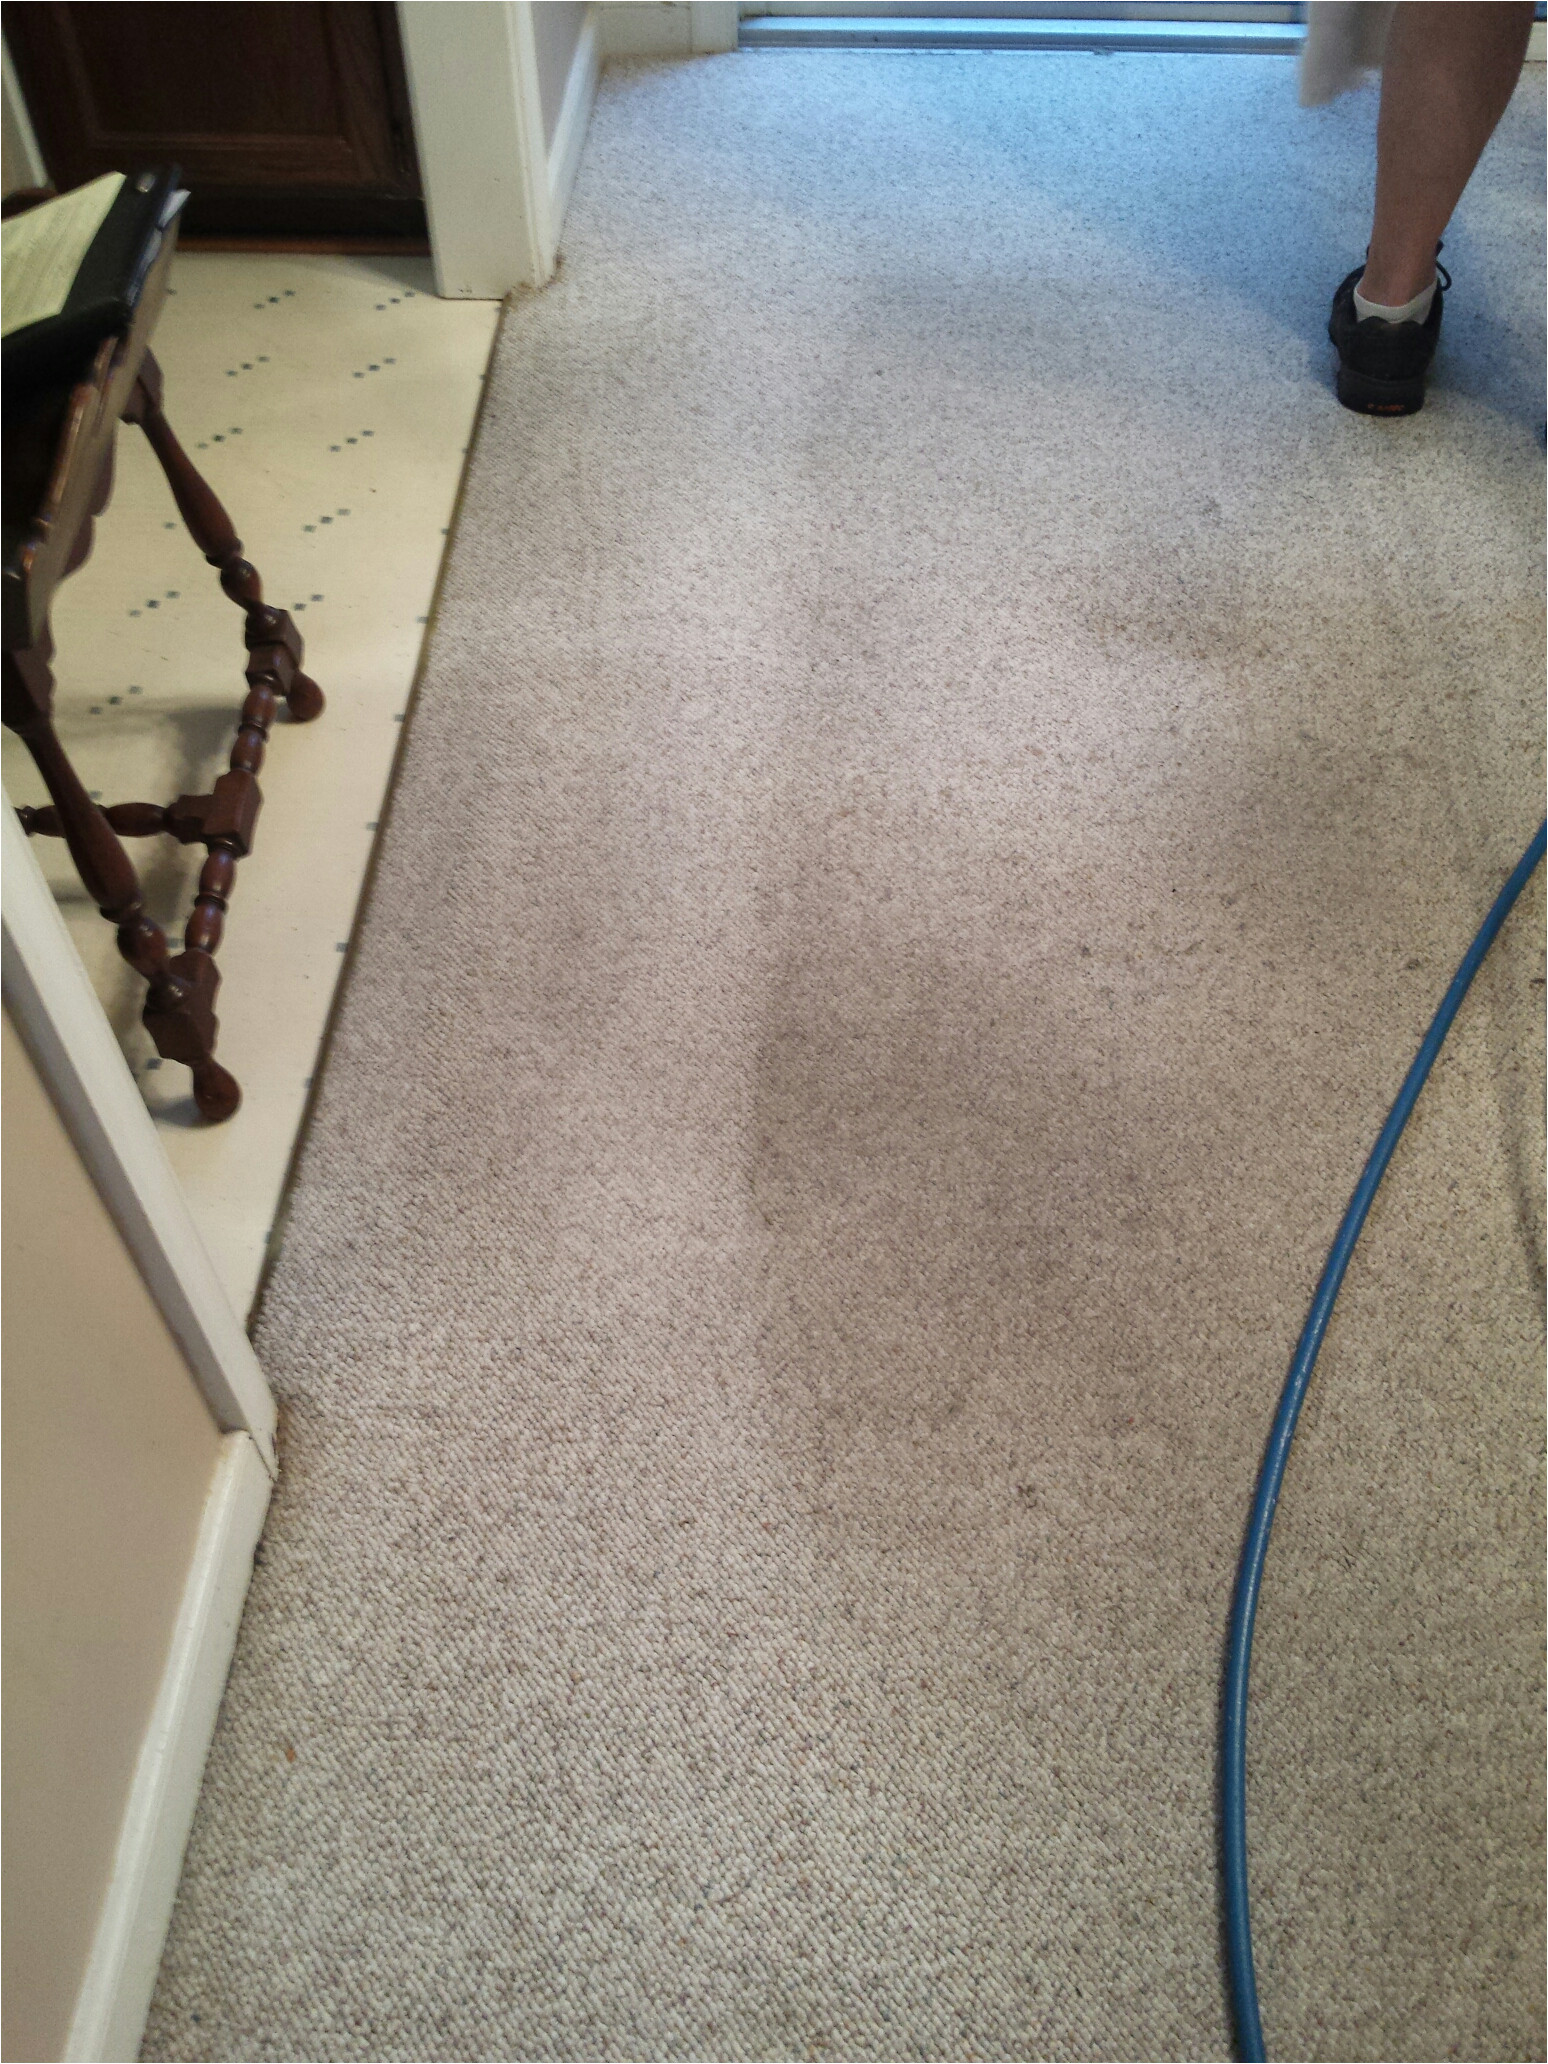 carpet cleaners in midlothian va awesome carpet rug upholstery cleaning ashland va of carpet cleaners in midlothian va jpg